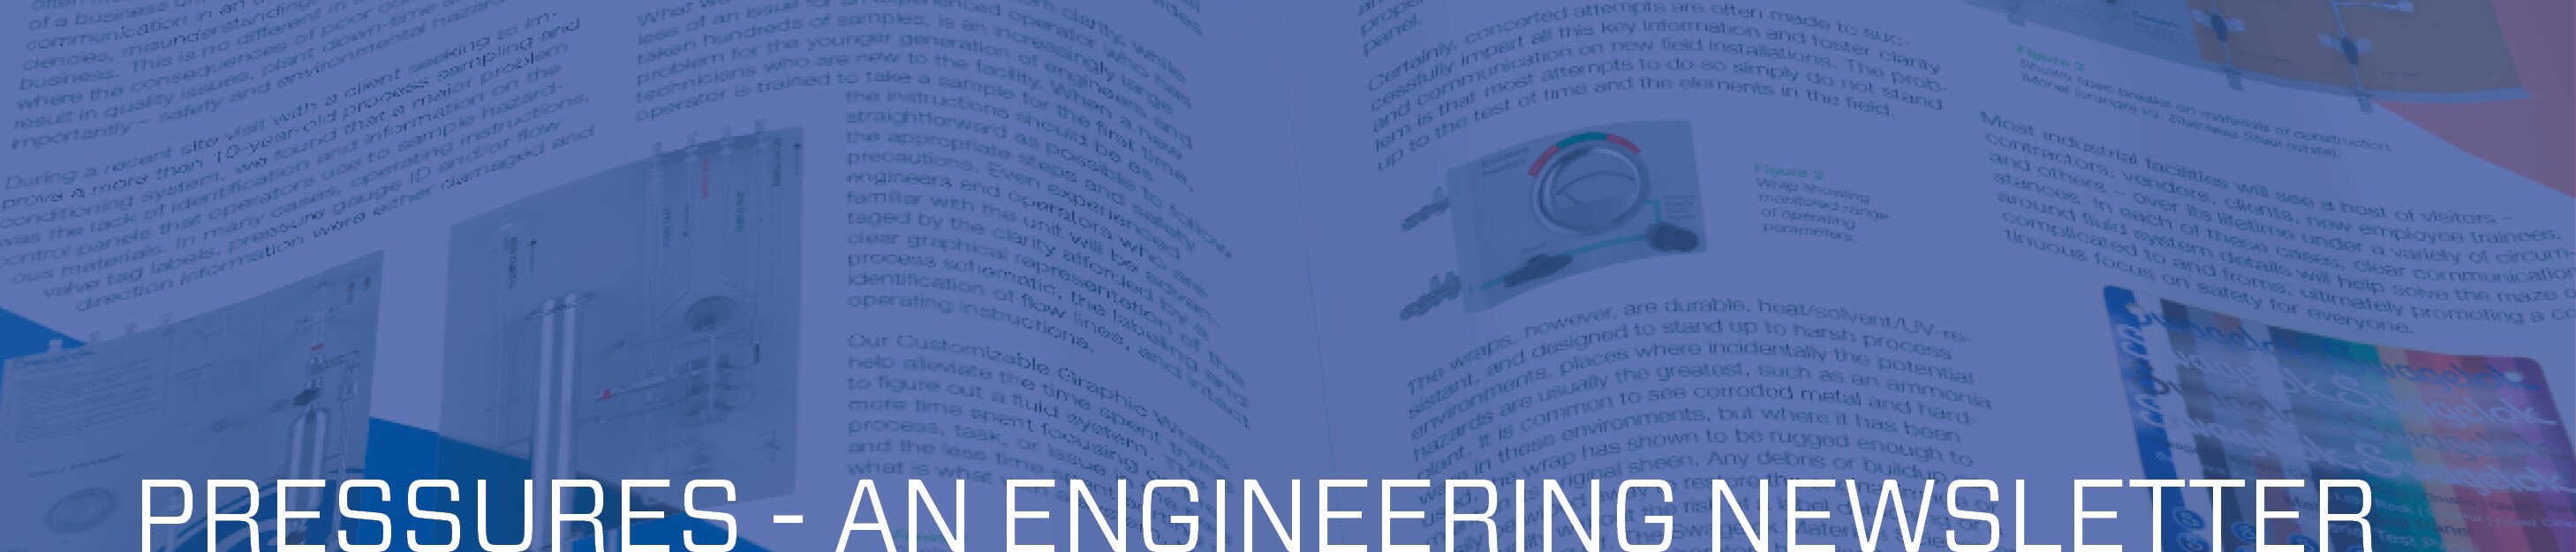 Pressures - An Engineering Newsletter